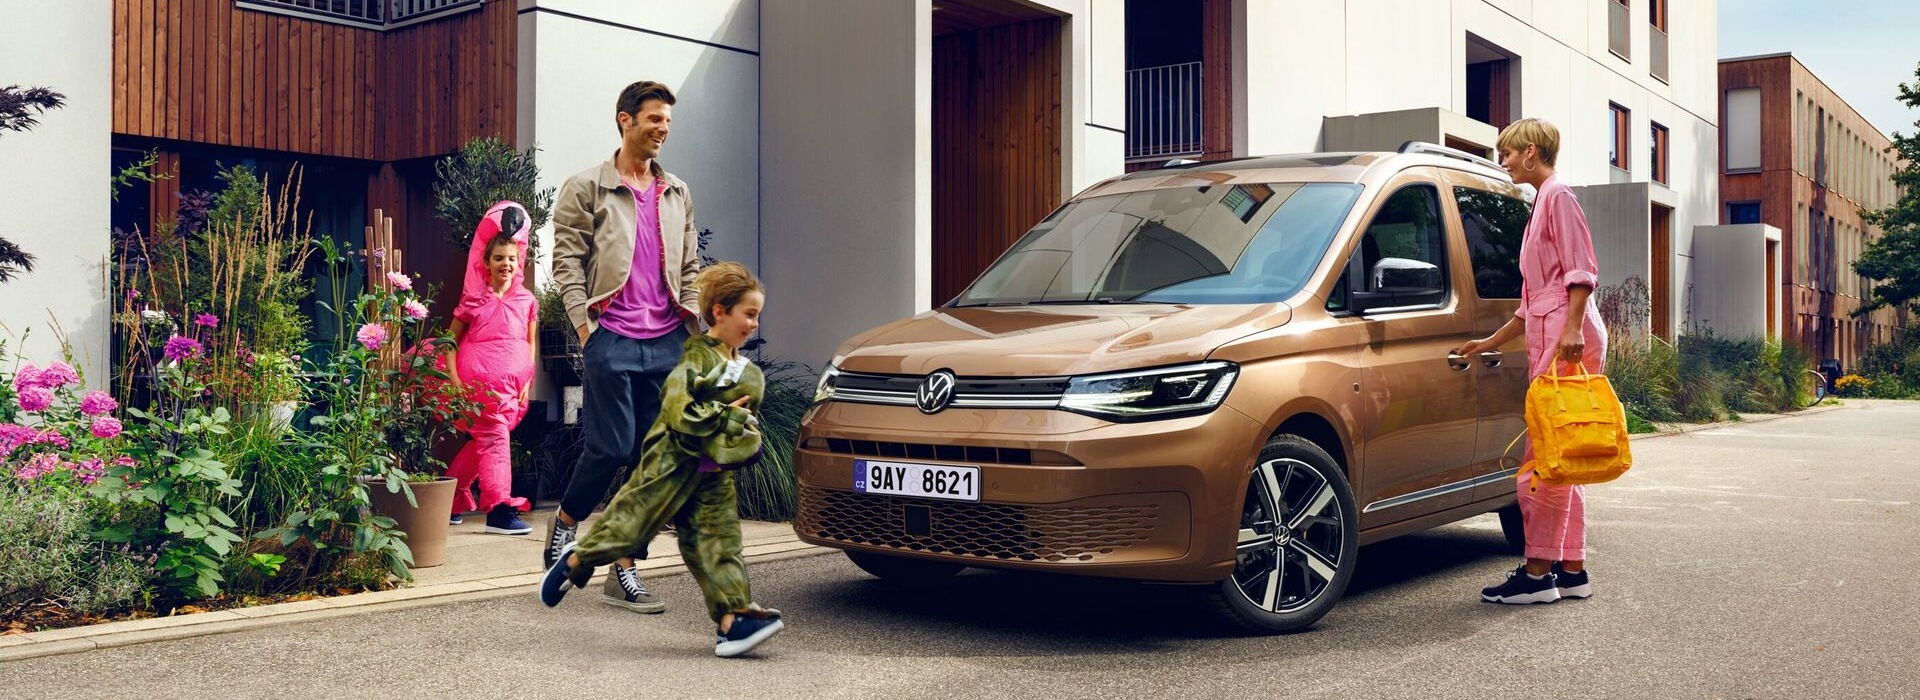 Volkswagen Caddy s rodinou